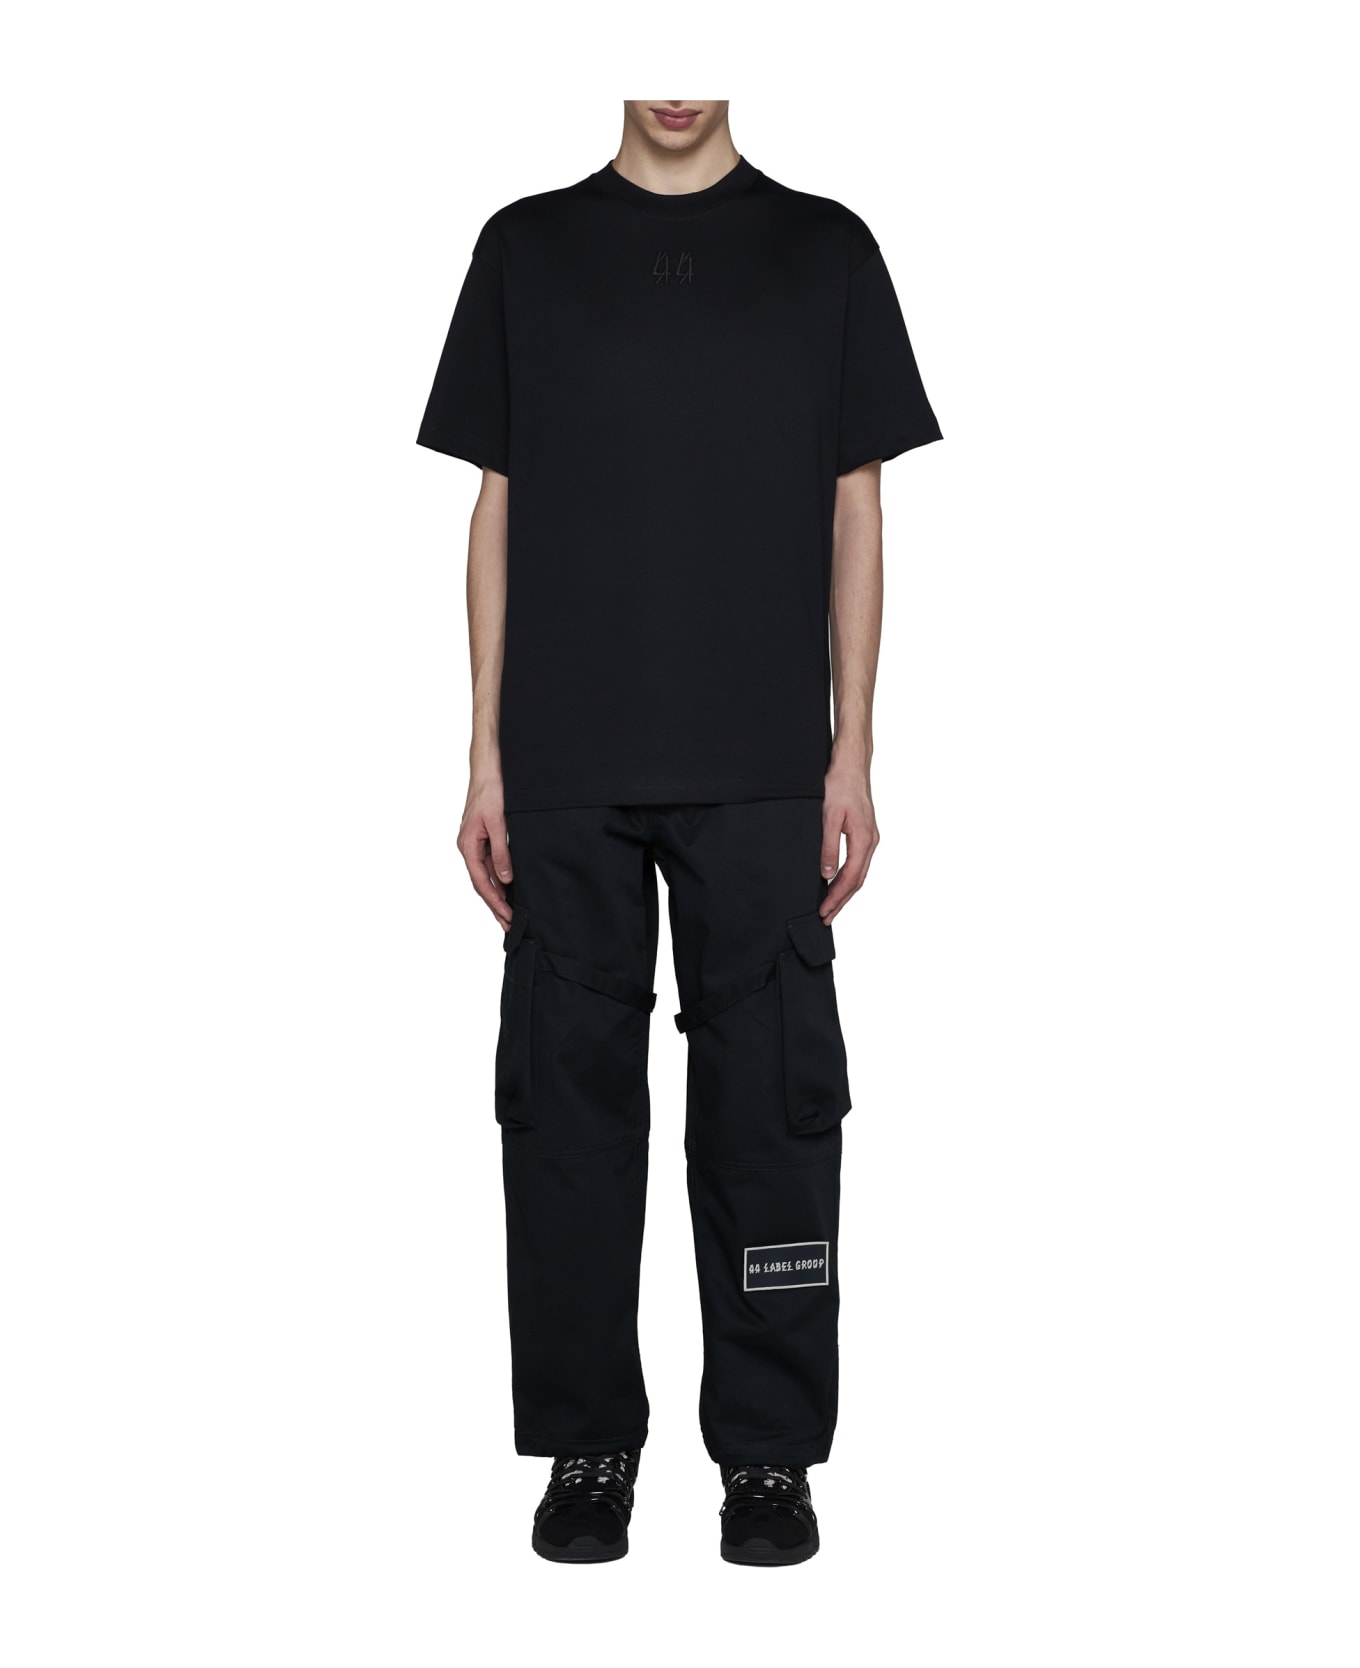 44 Label Group T-Shirt - Black+44 gaffer print シャツ